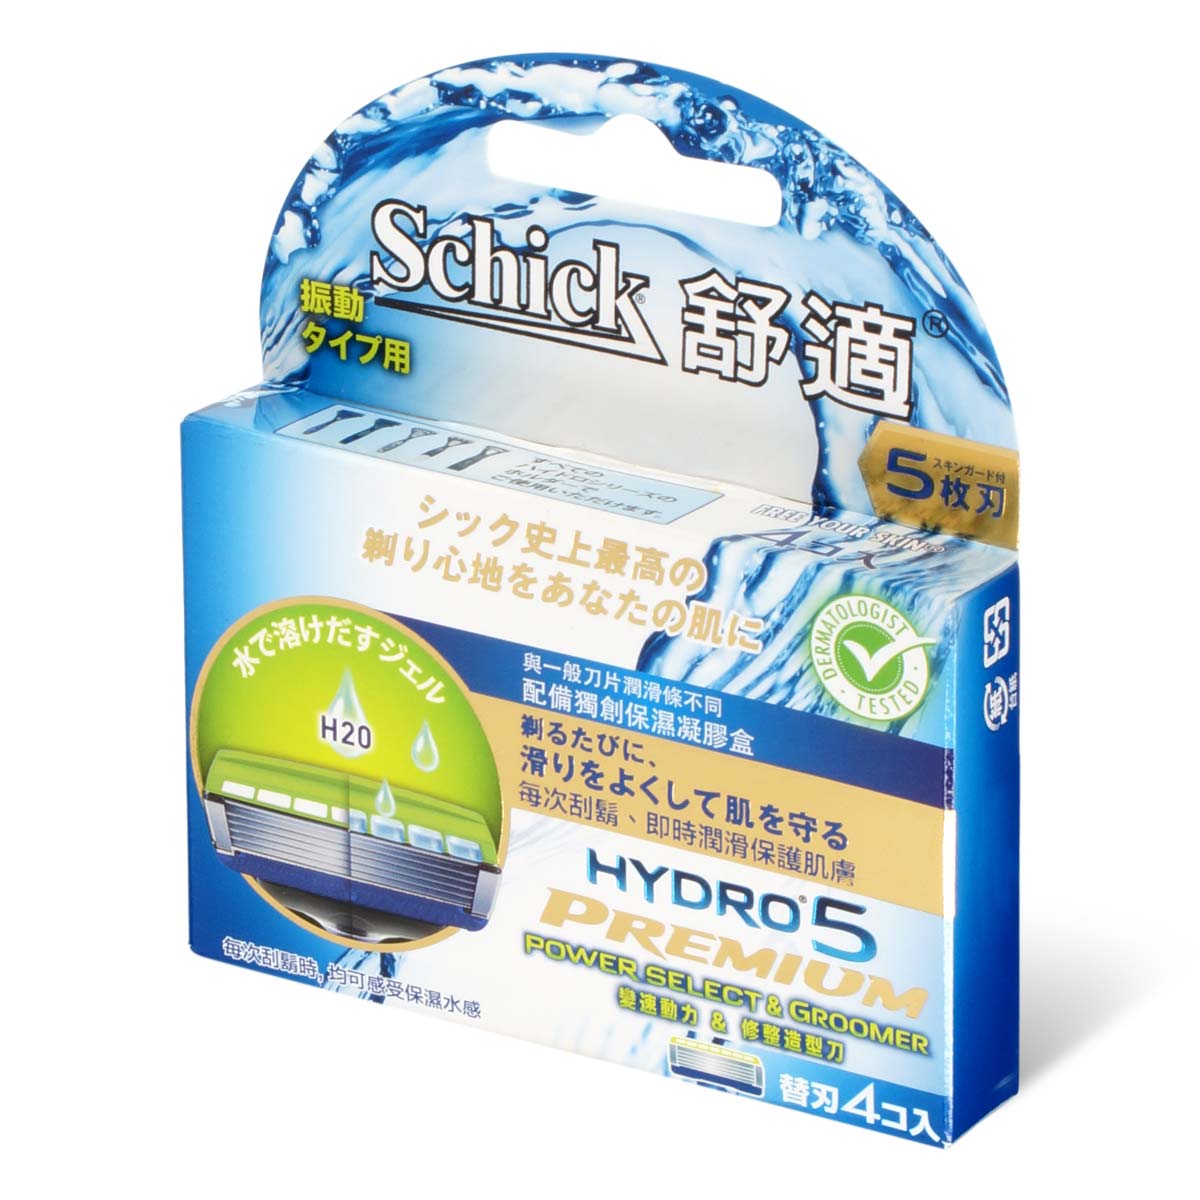 Schick 舒適 Hydro5 Power Select & Groomer 變速動力 & 修整造型刀補充刀片 4 片-p_1